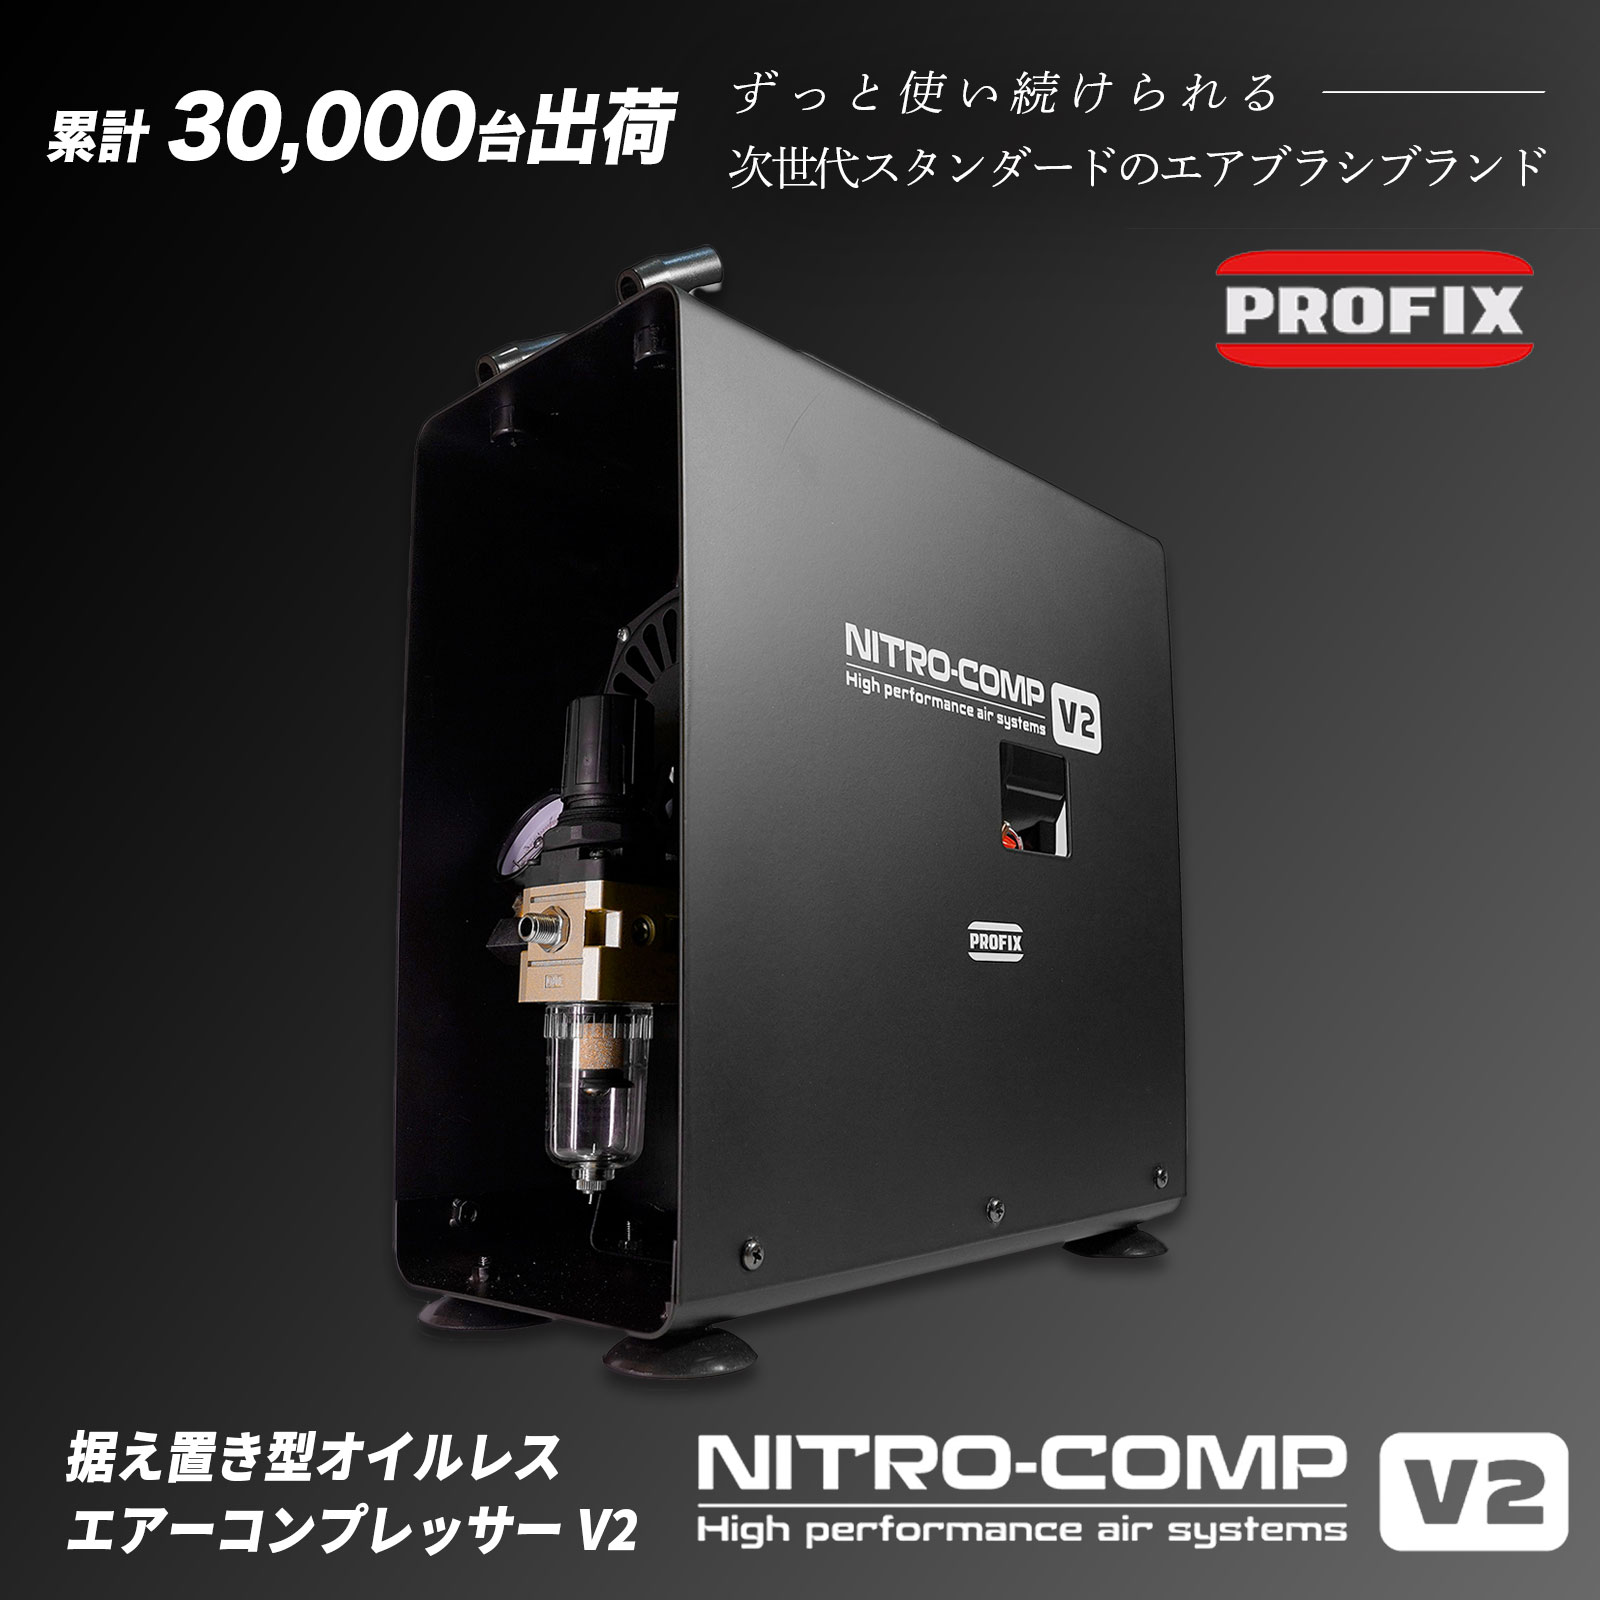 PROFIX NITRO-COMP V2 3Lタンク付きモデル オイルレスエアー 